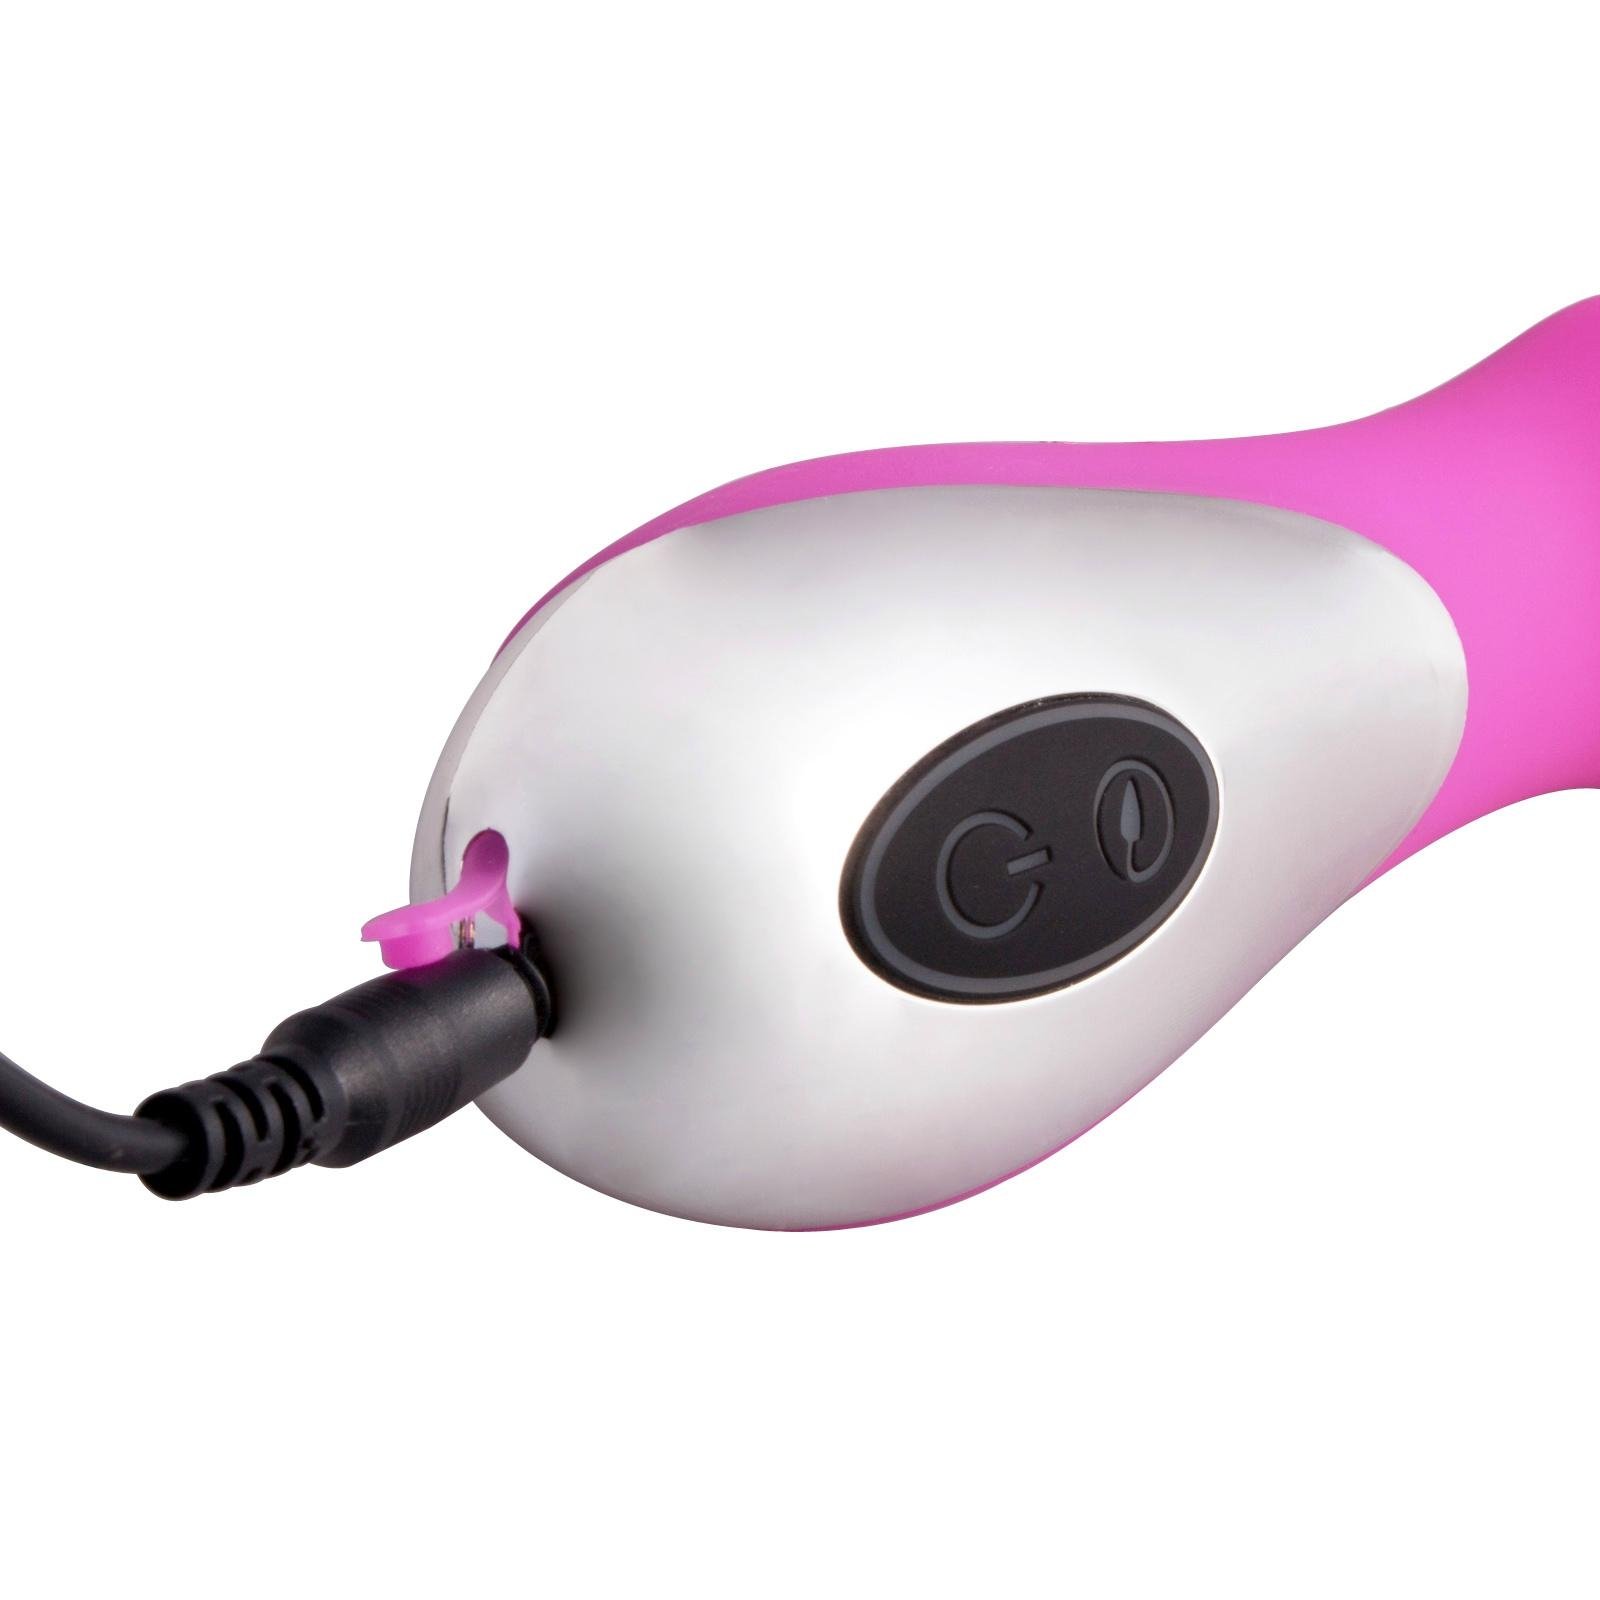 DL-Laura QunLi sextoy rechargeable vibrator for female rabbit massager 4